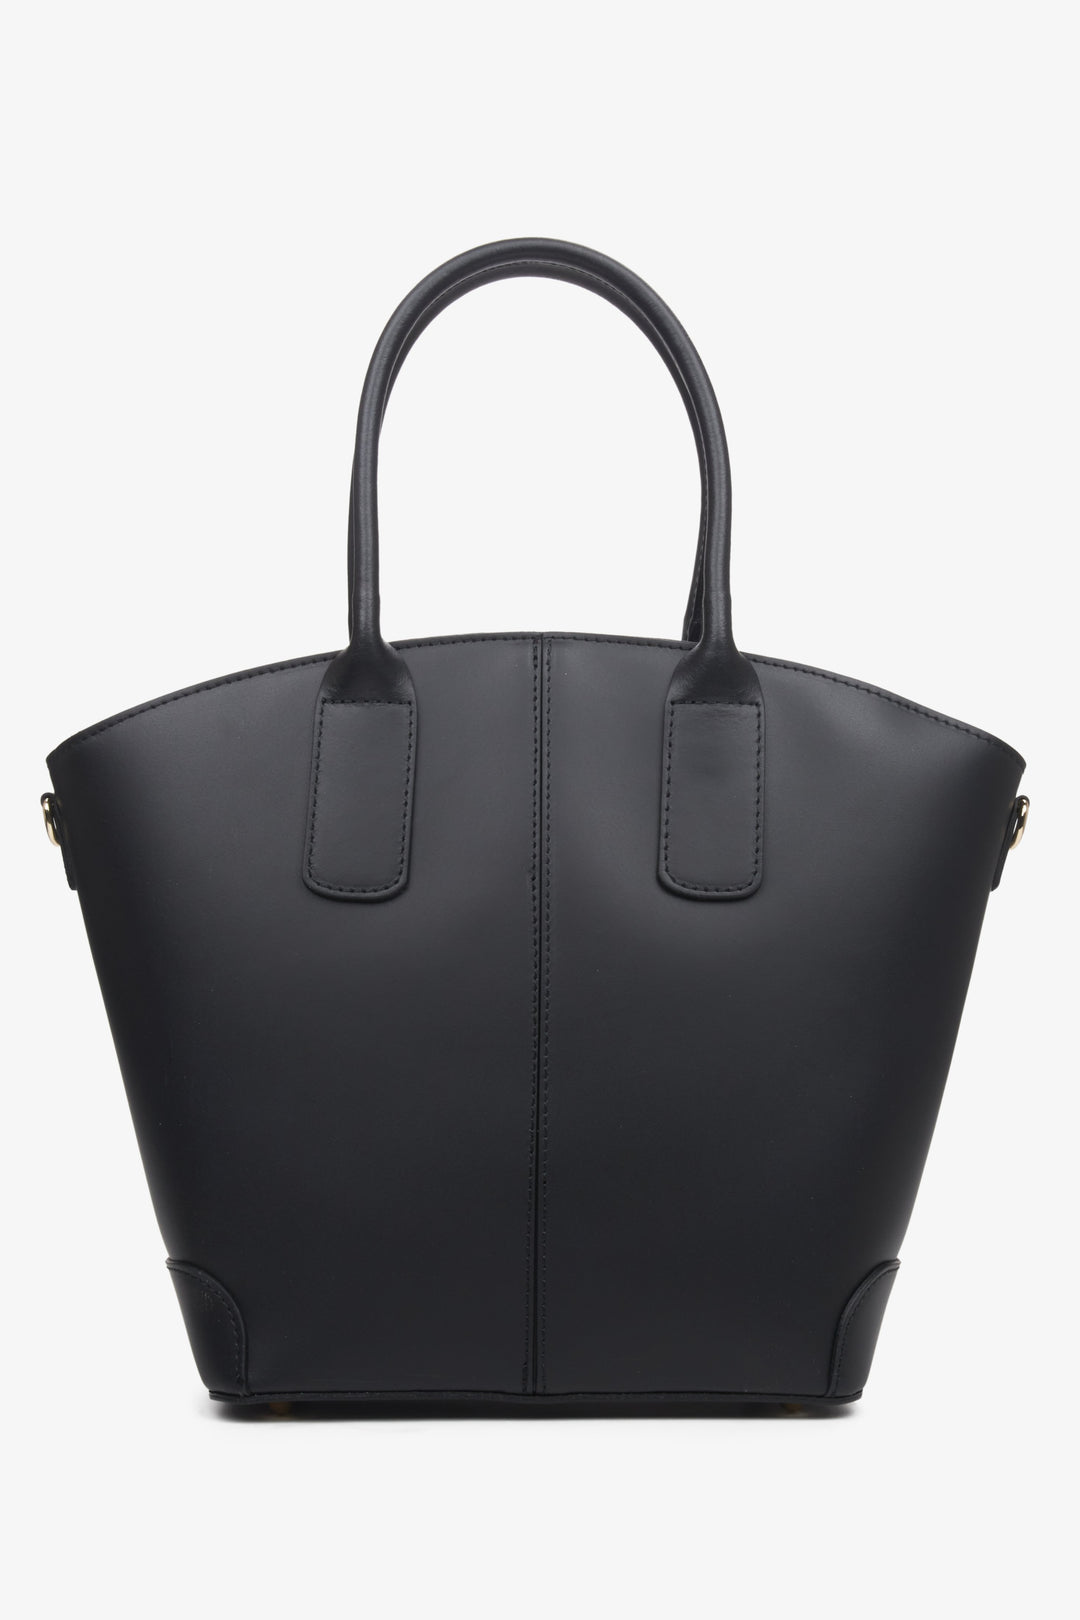 Estro women's black shopper bag made of Italian genuine leather